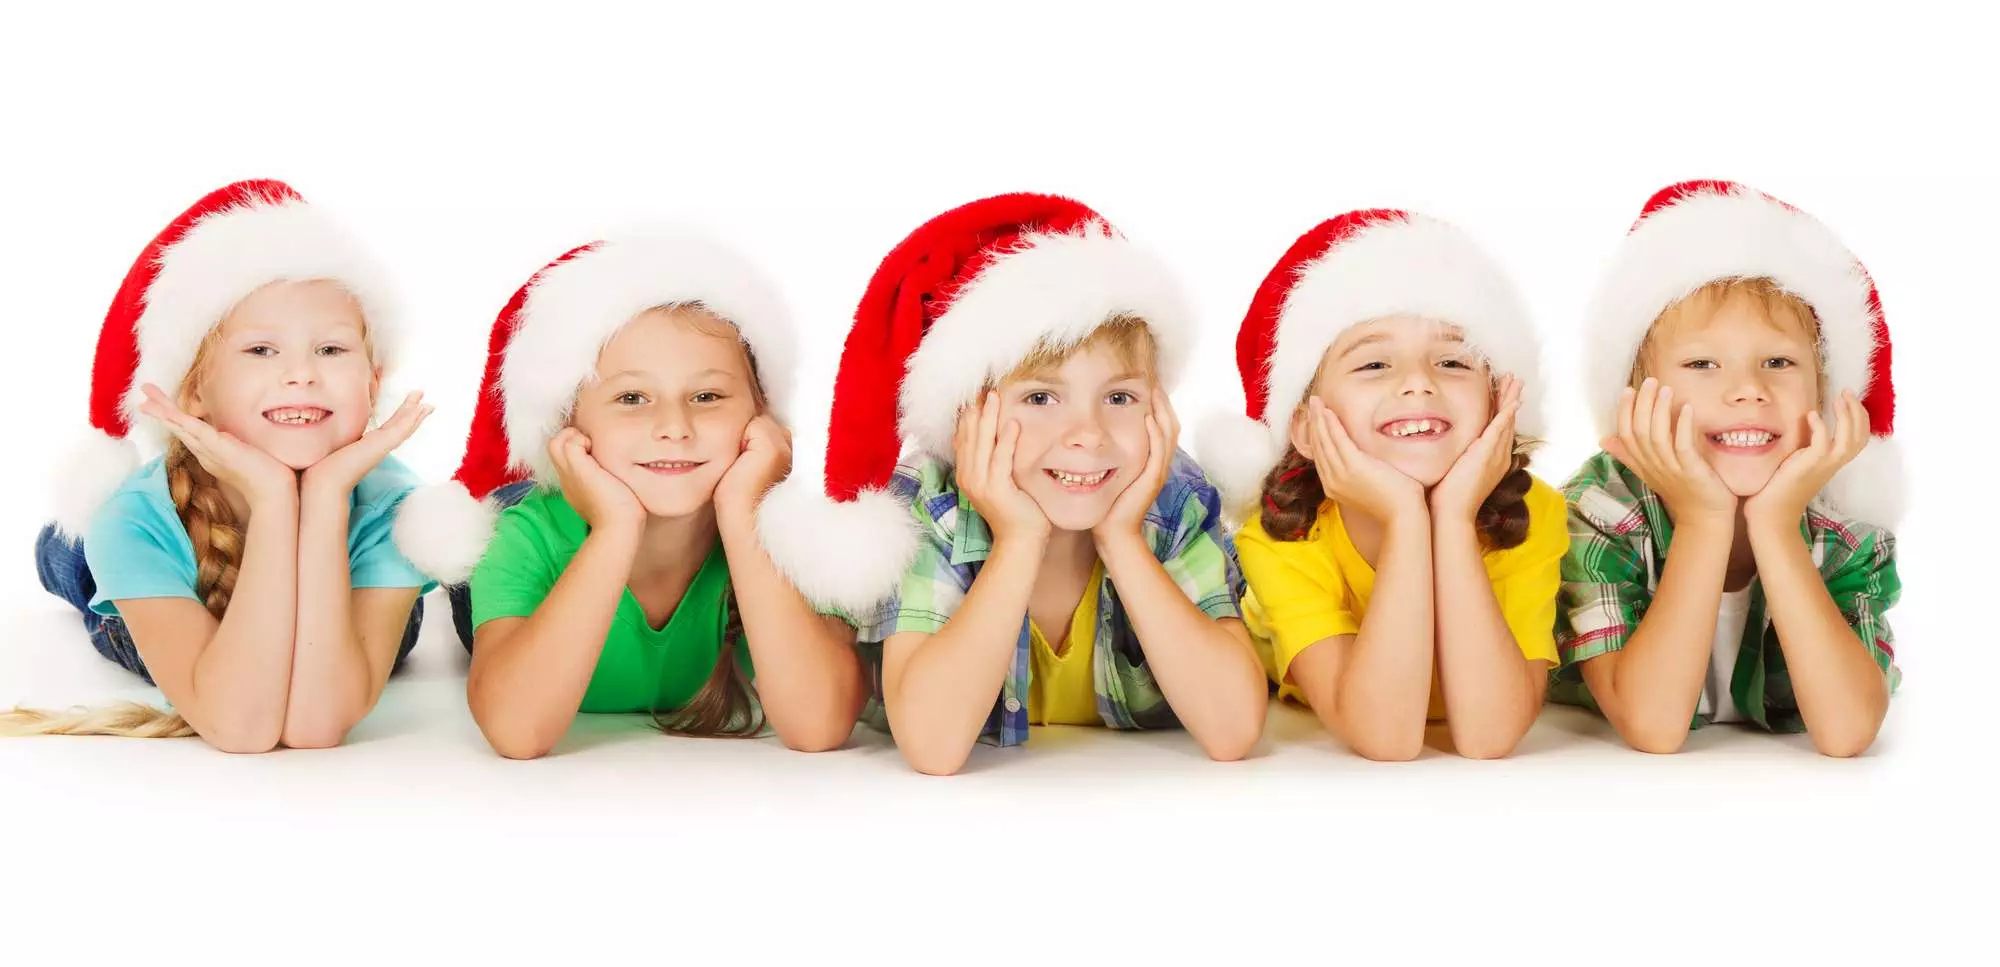 kids wearing Santa hats - how to talk to kids about Santa